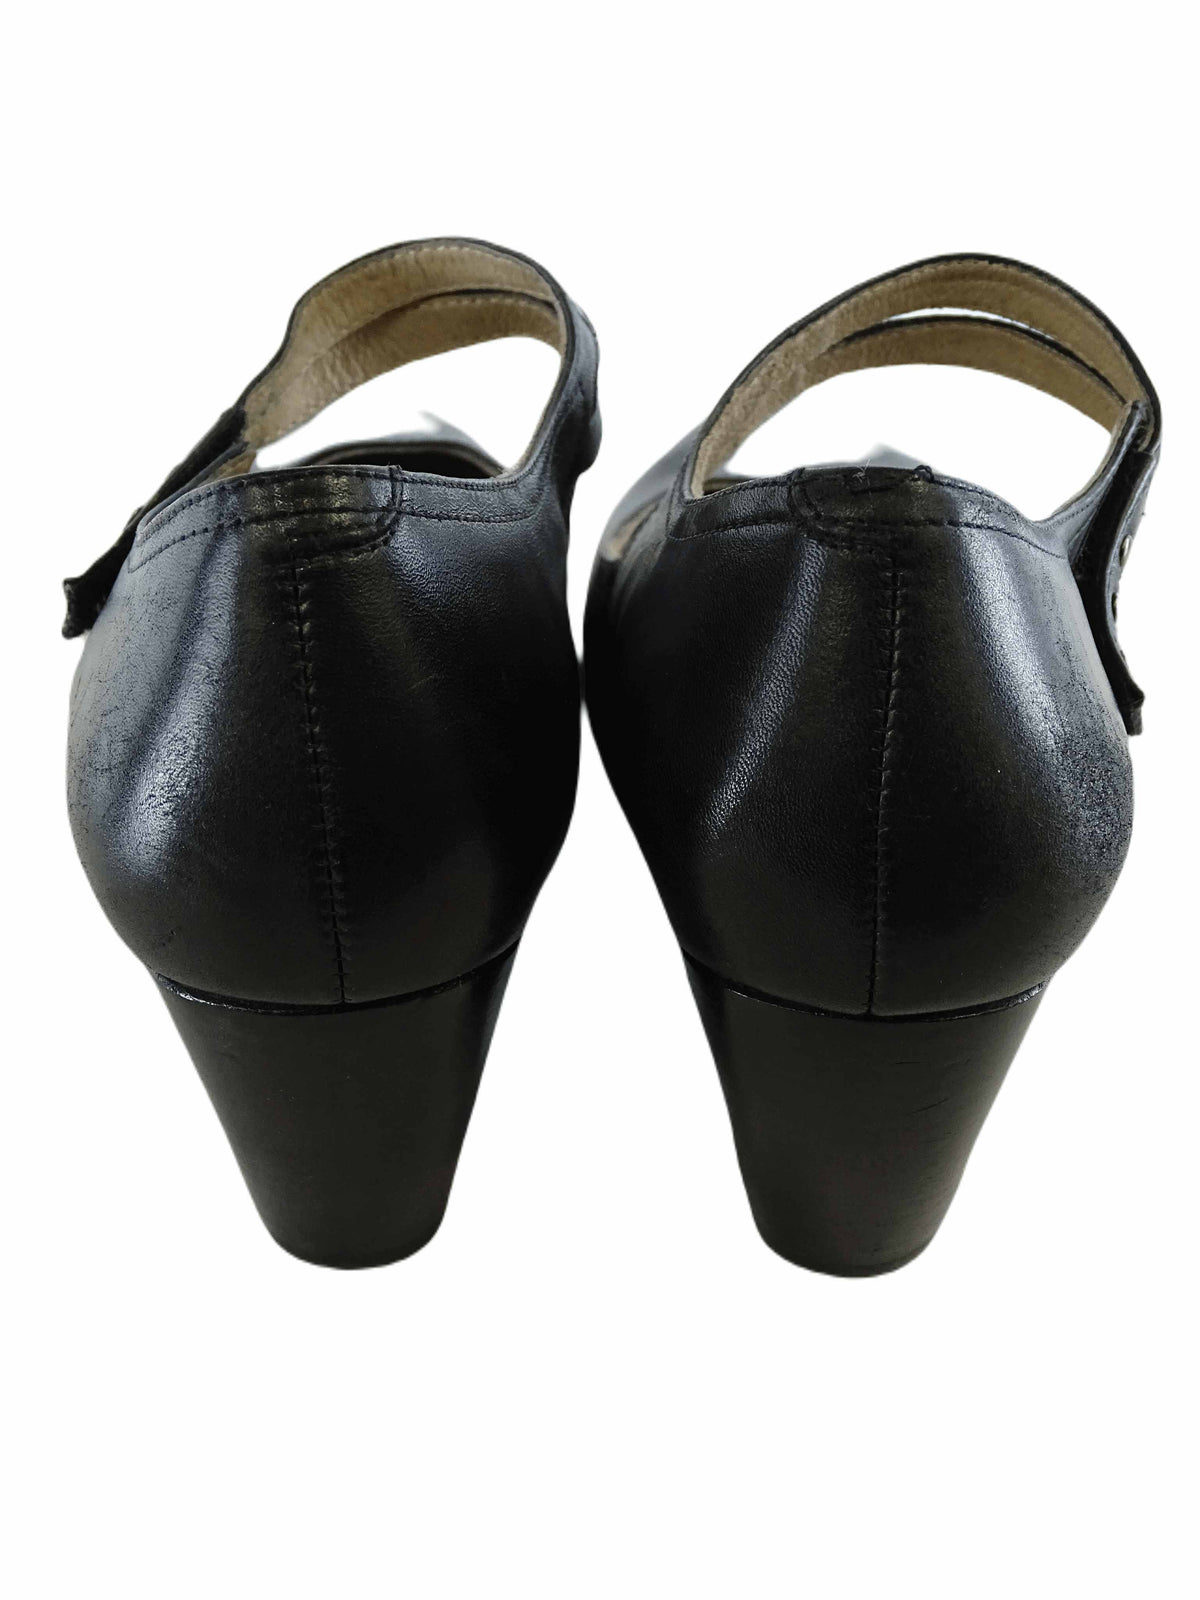 Gino Ventori Black Mary Janes (Heels) 40